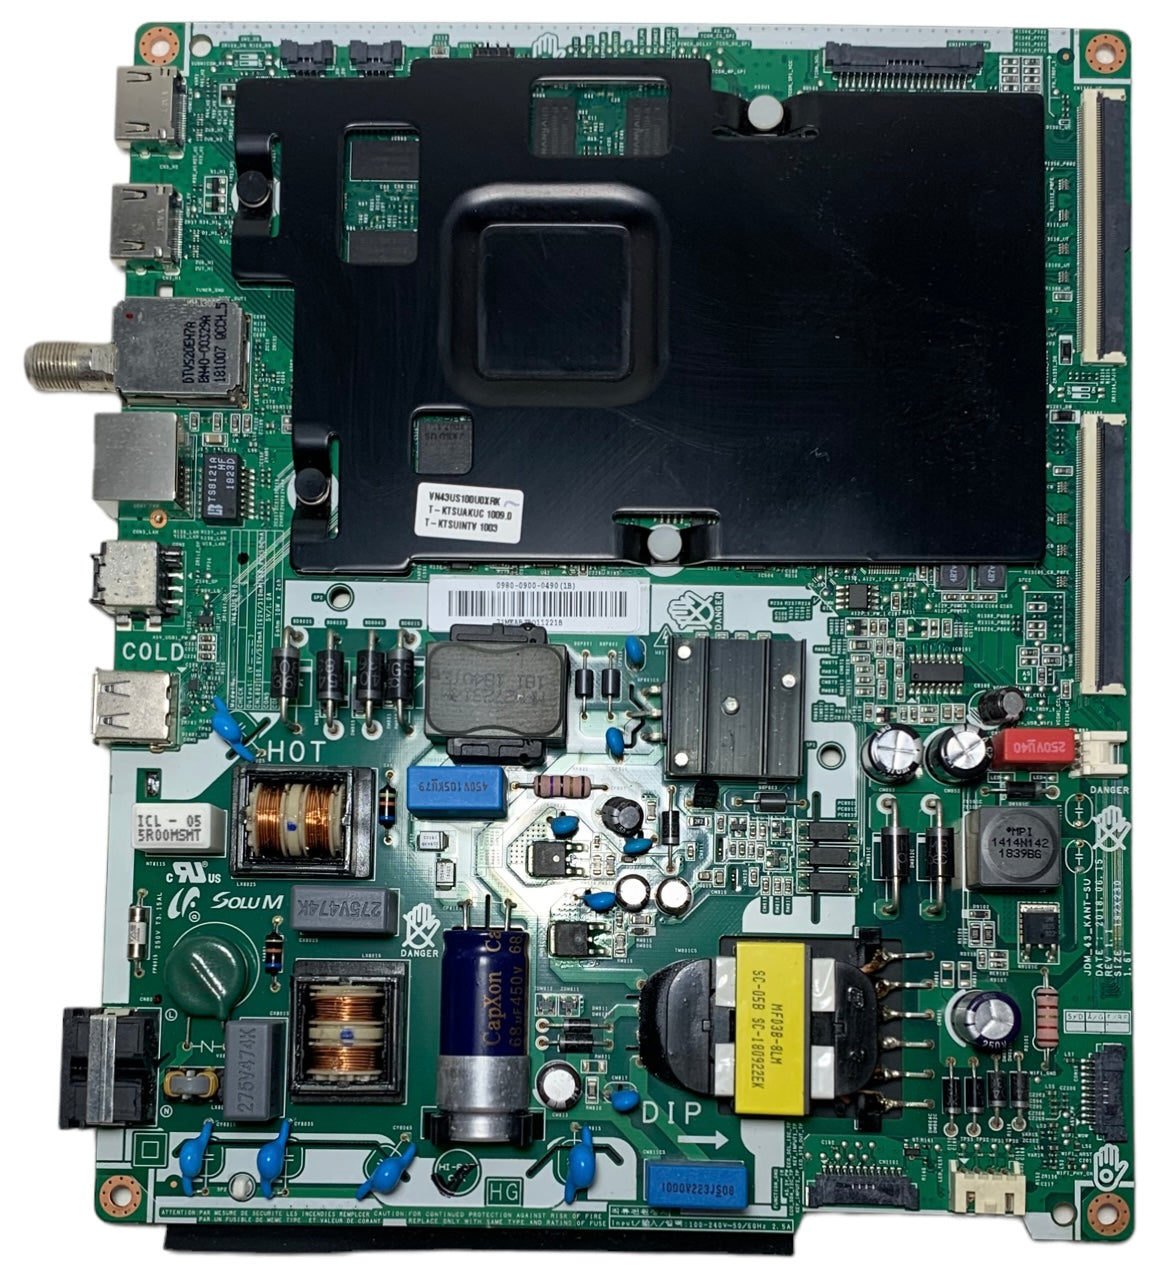 Samsung BN81-16985A (0980-0900-0490) Main Board/Power Supply for UN43NU6900FXZA (Version RZ03)